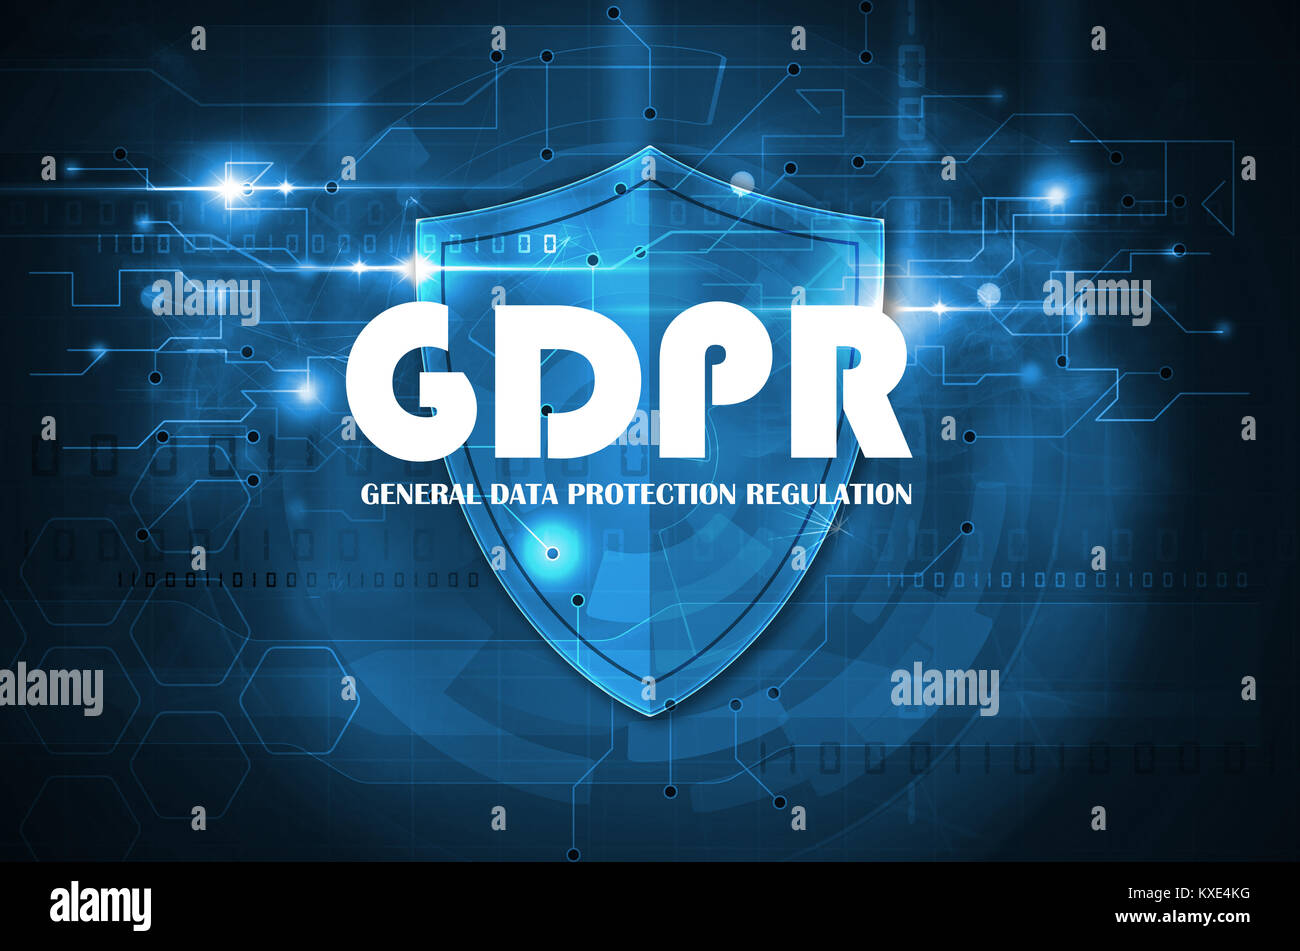 General Data Protection Regulation (GDPR) Stock Photo